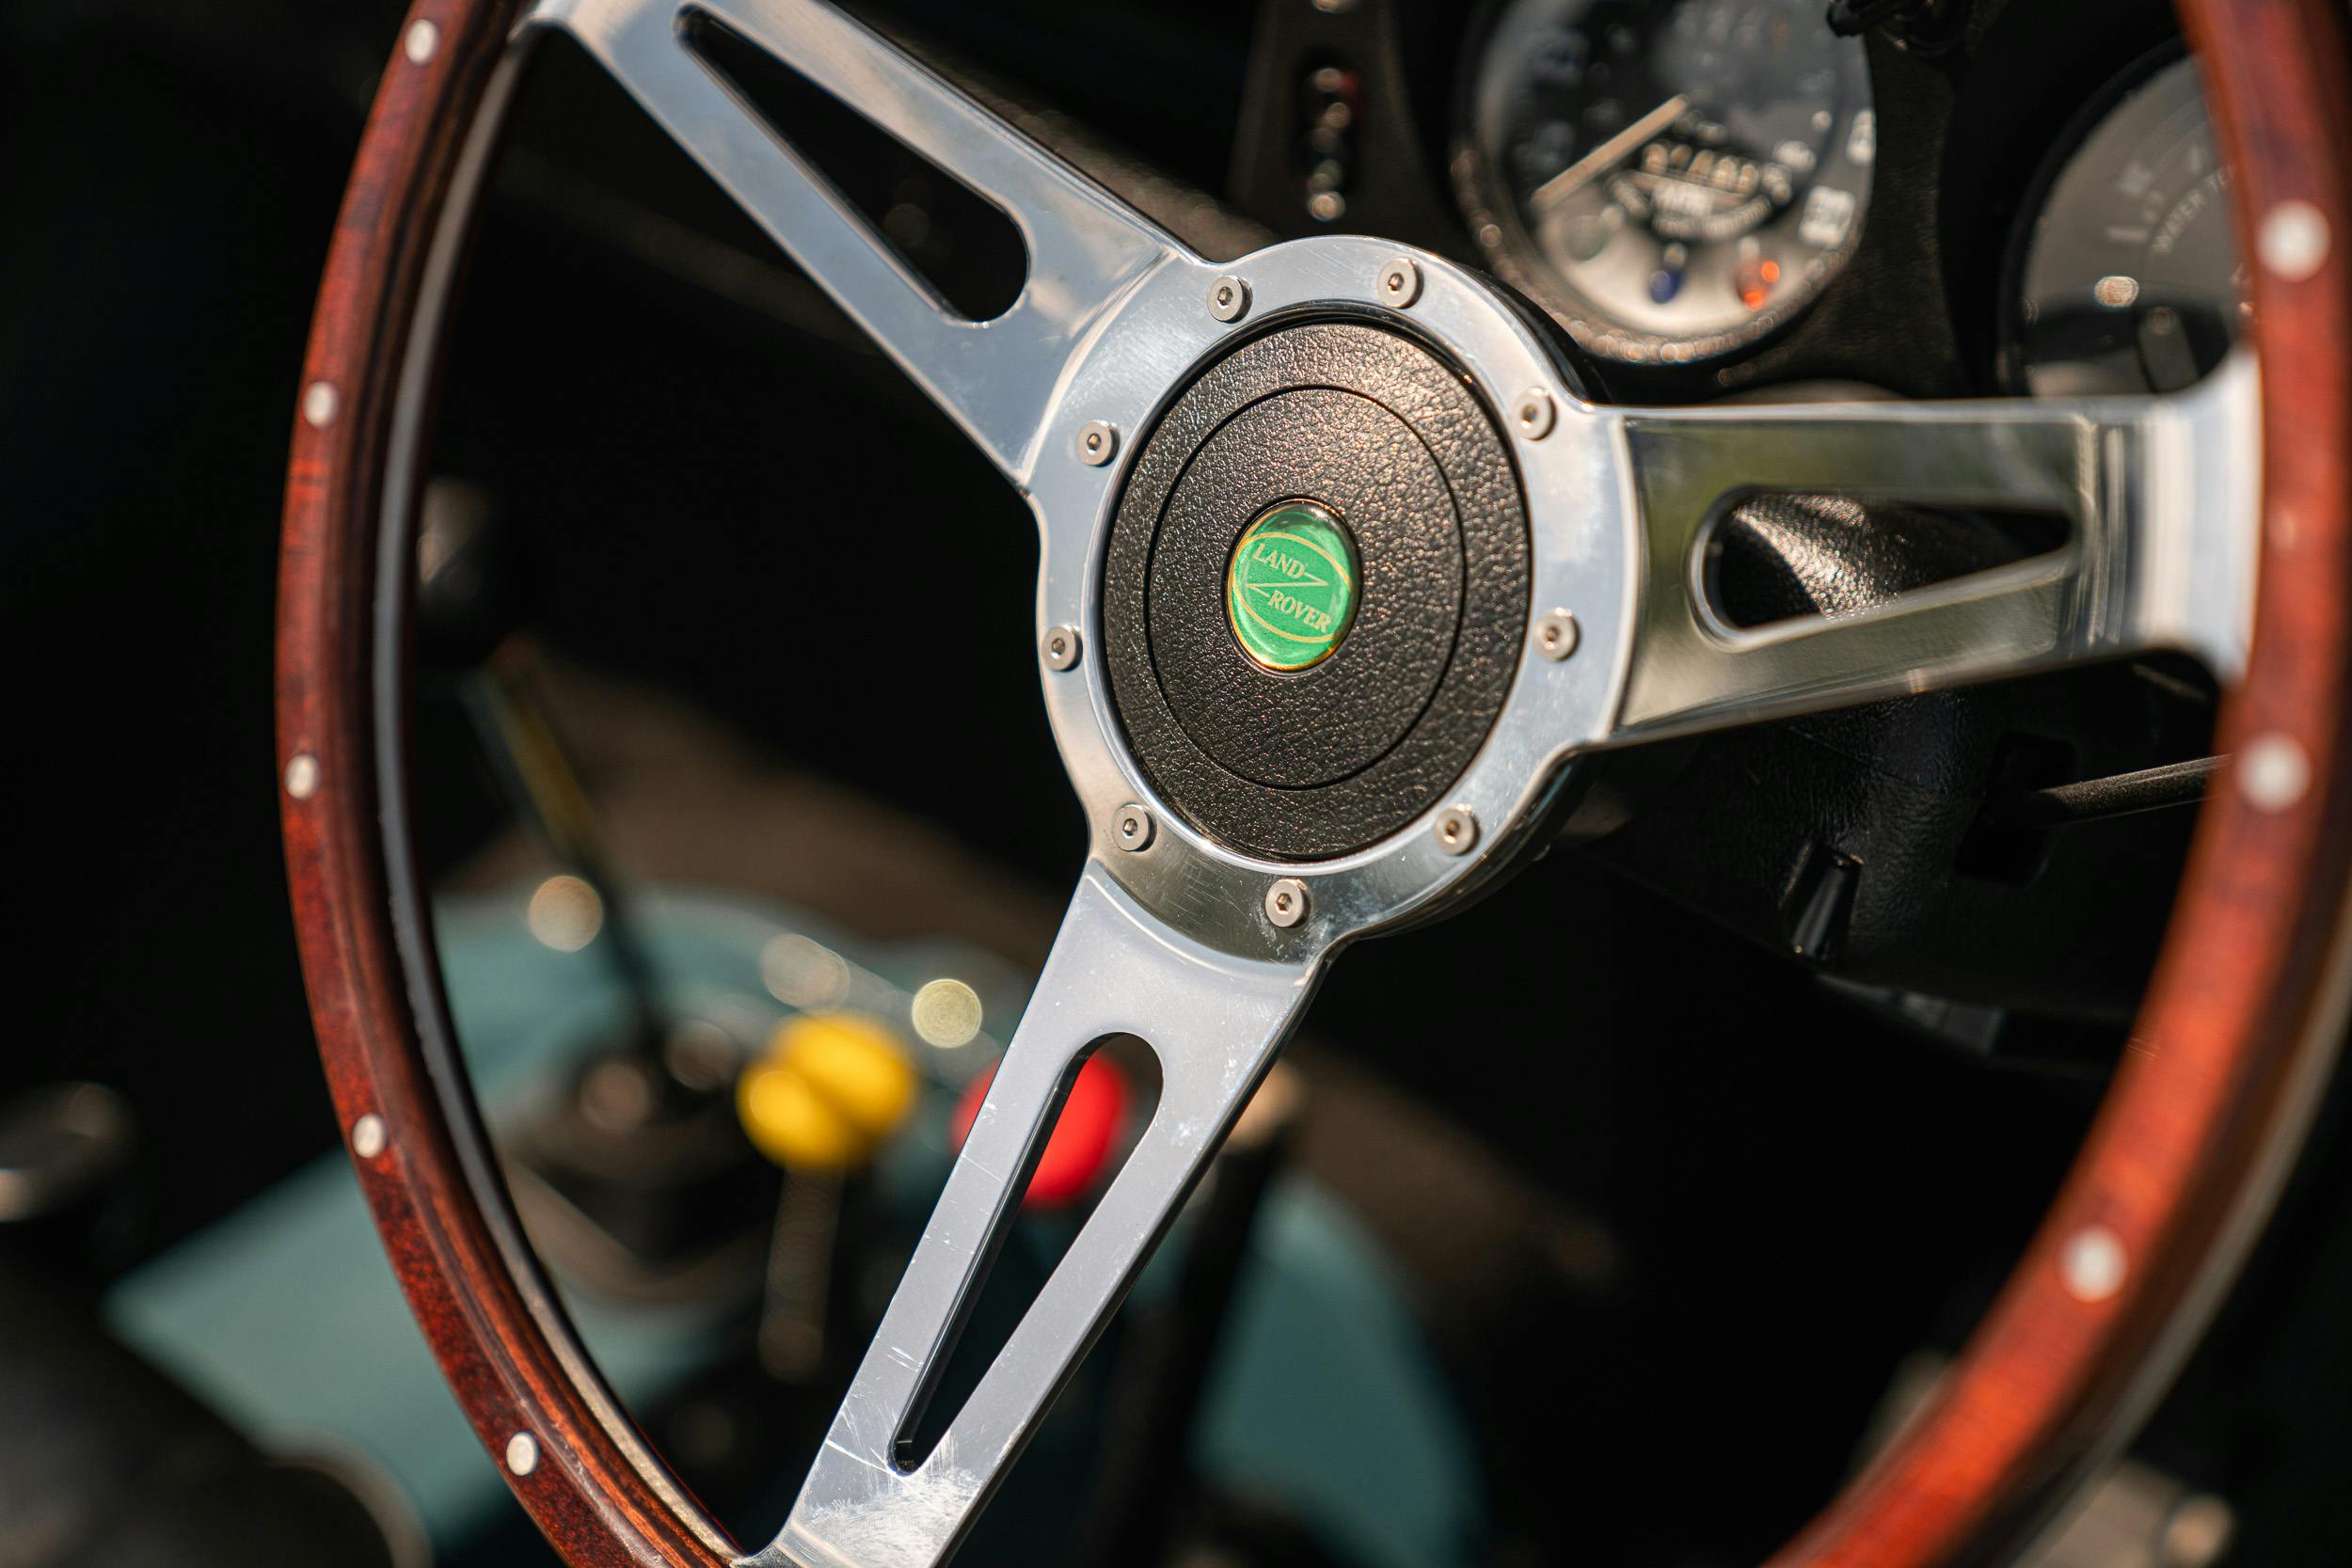 1982 Land Rover interior steering wheel